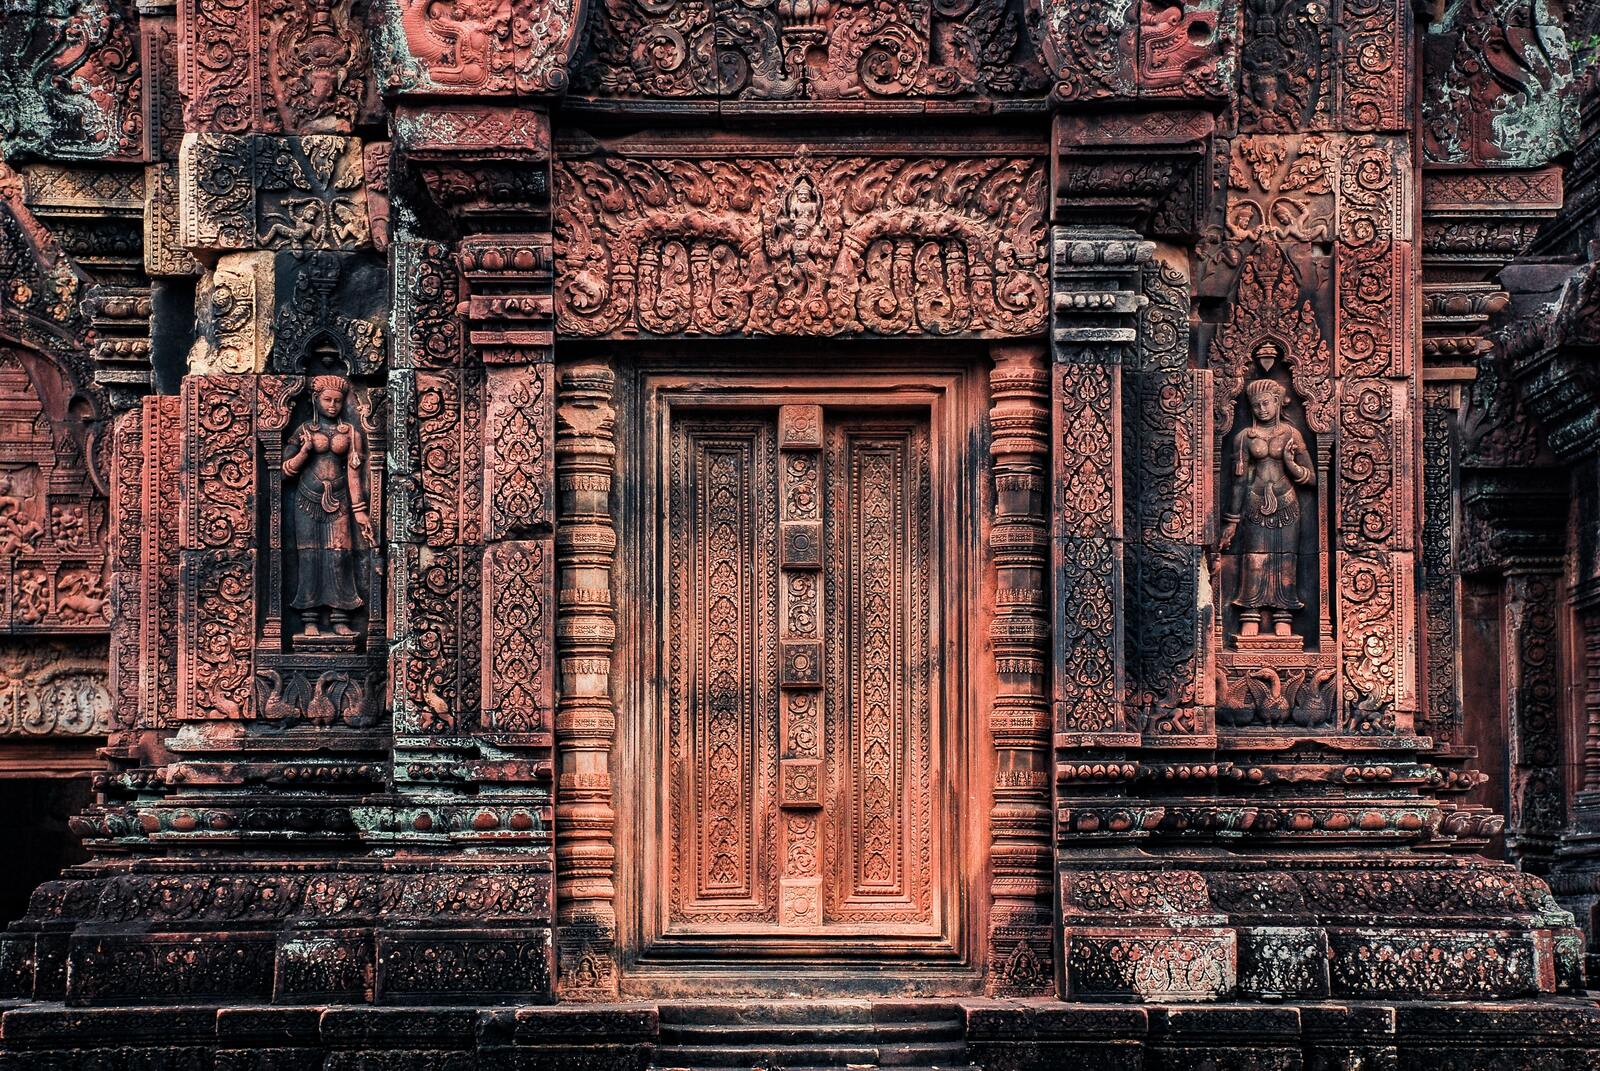 Image of Banteay Srei by Team PhotoHound